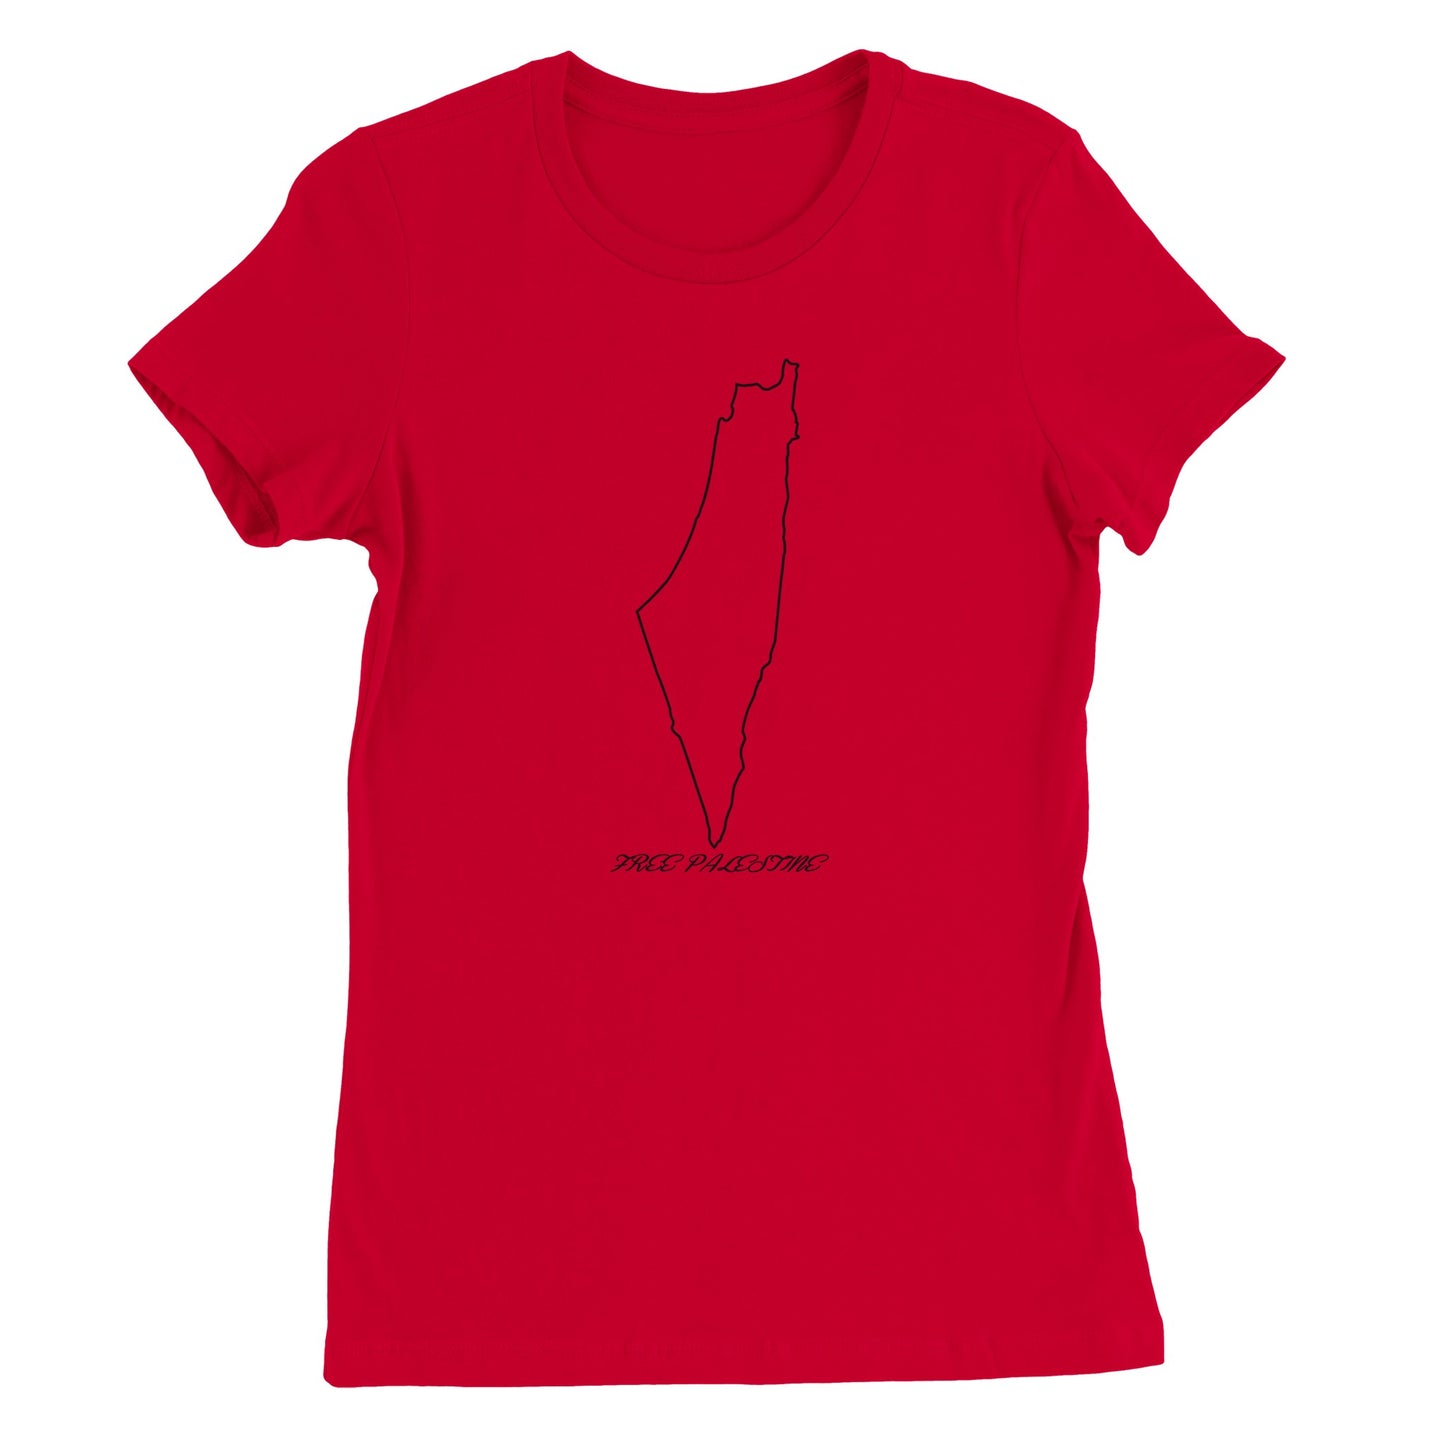 Free Palestine - Outline - Premium Kvinde T-shirt